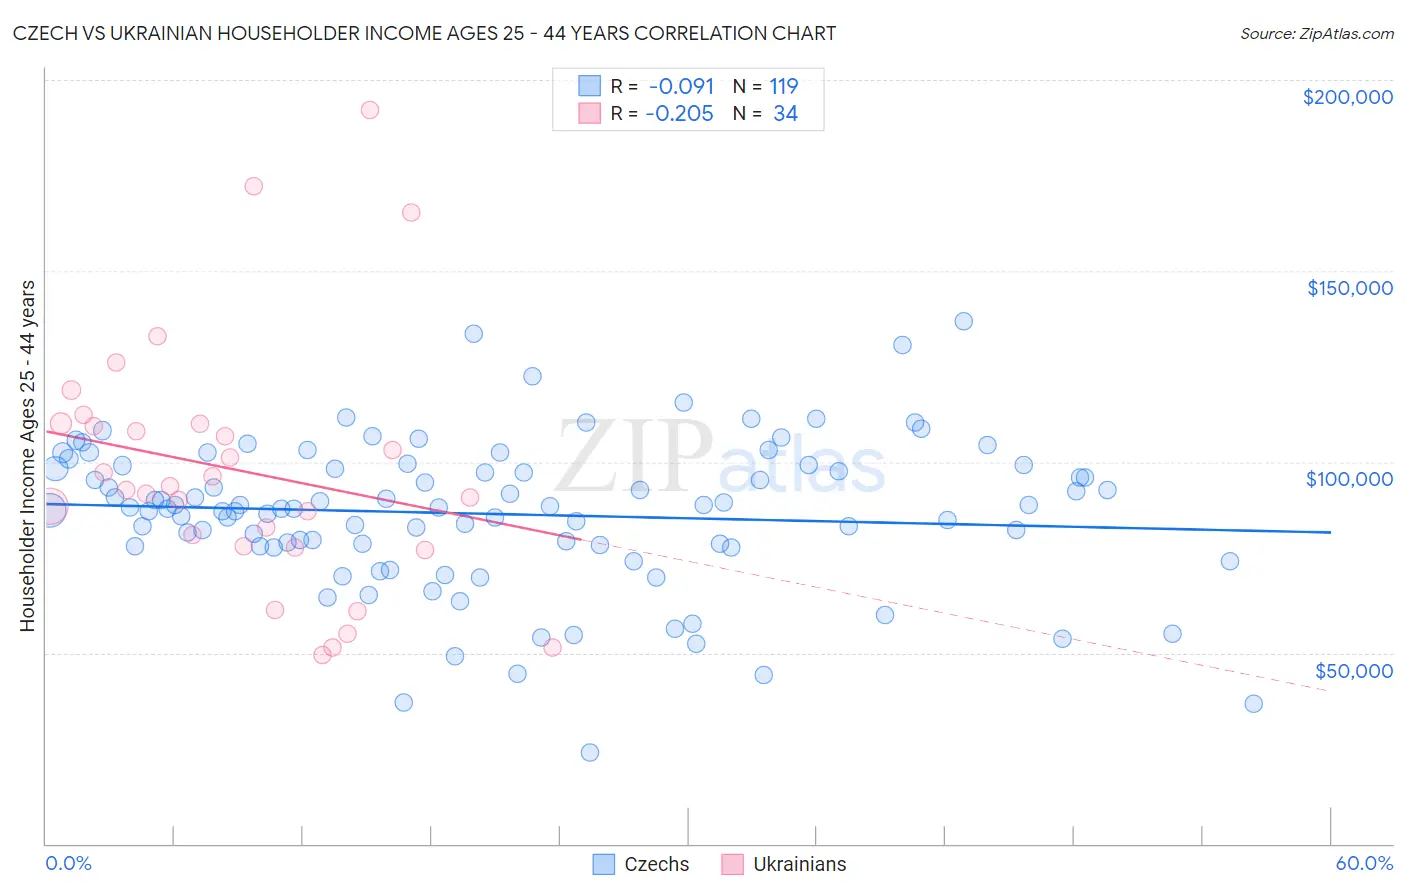 Czech vs Ukrainian Householder Income Ages 25 - 44 years